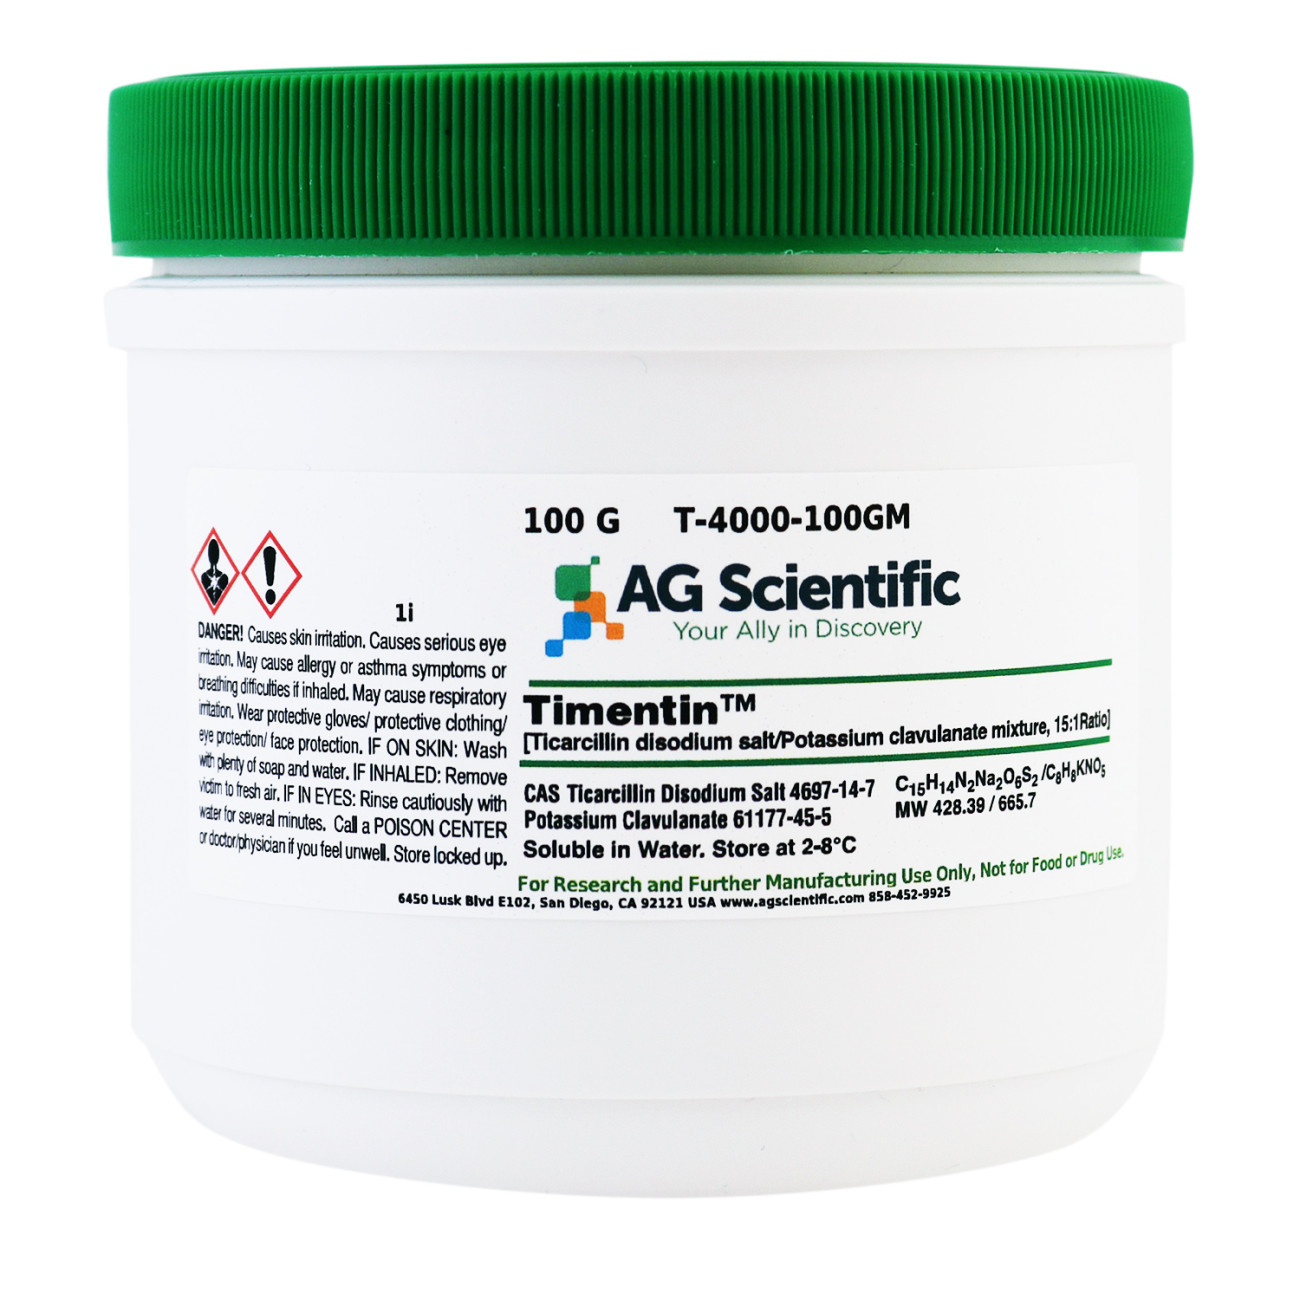 Timentin [Ticarcillin Disodium Salt / Potassium Clavulanate], USP Grade, 100 G